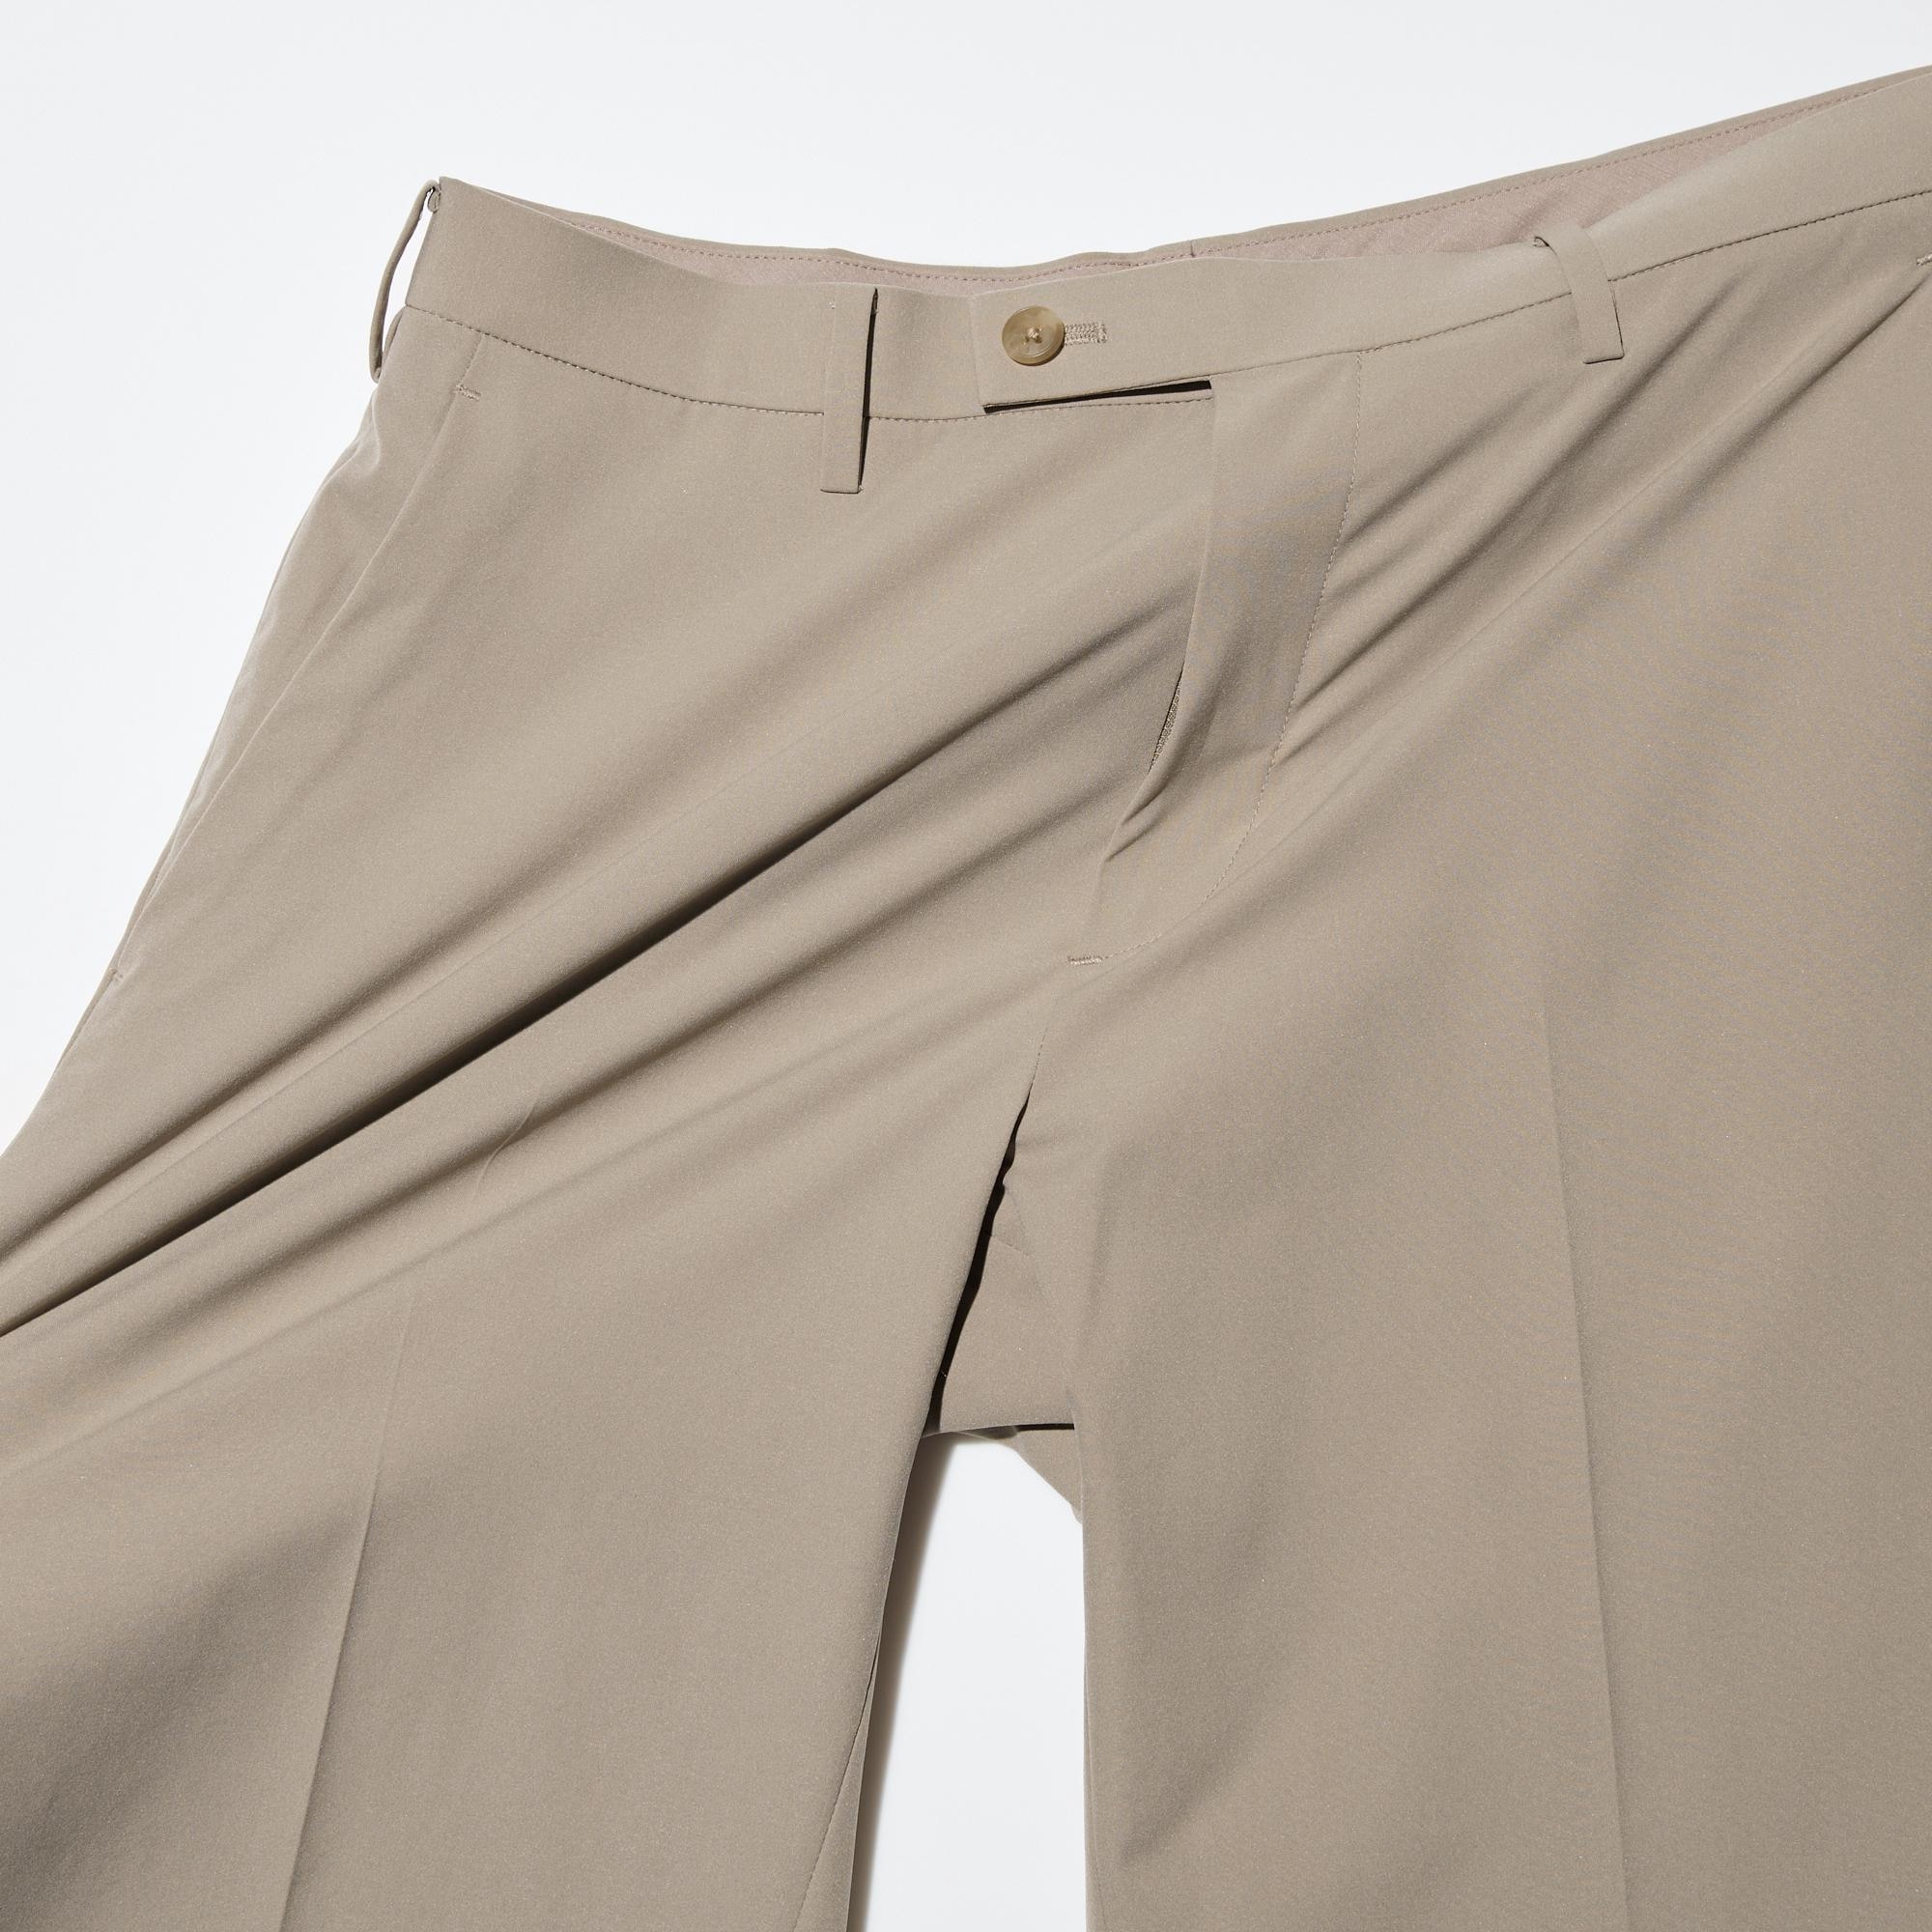 AirSense Pants (Cotton-Like)